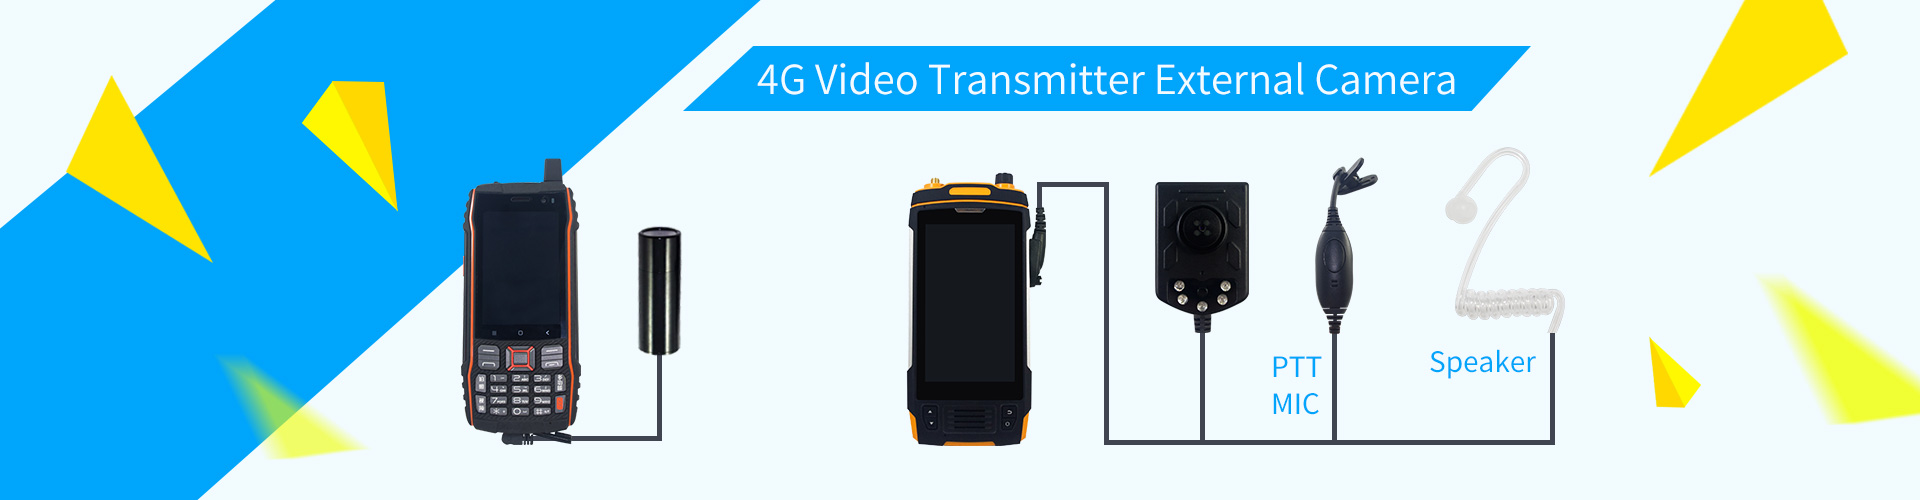 4G video transmitter with external camera